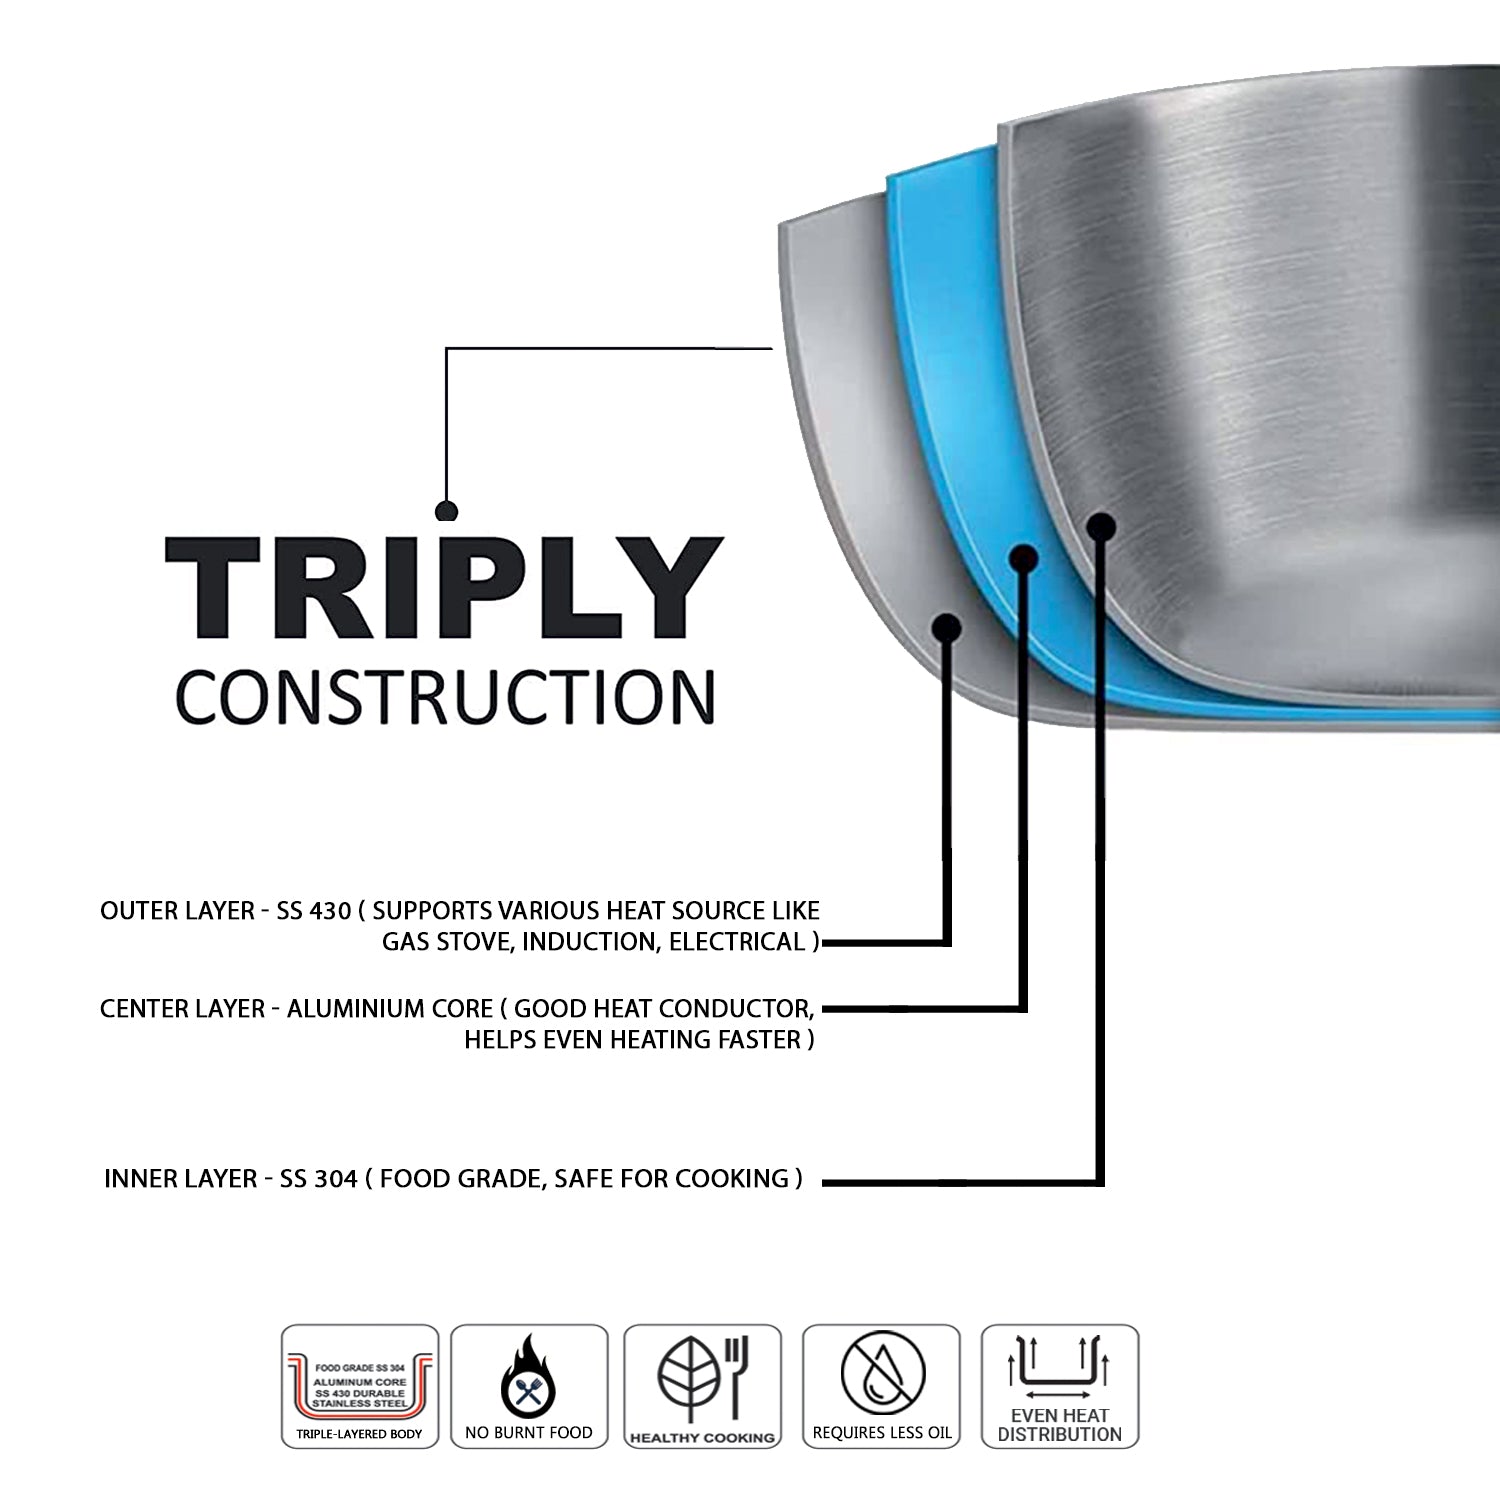 AVIAS Riara premium stainless steel Triply Fry pan tripple layer construction